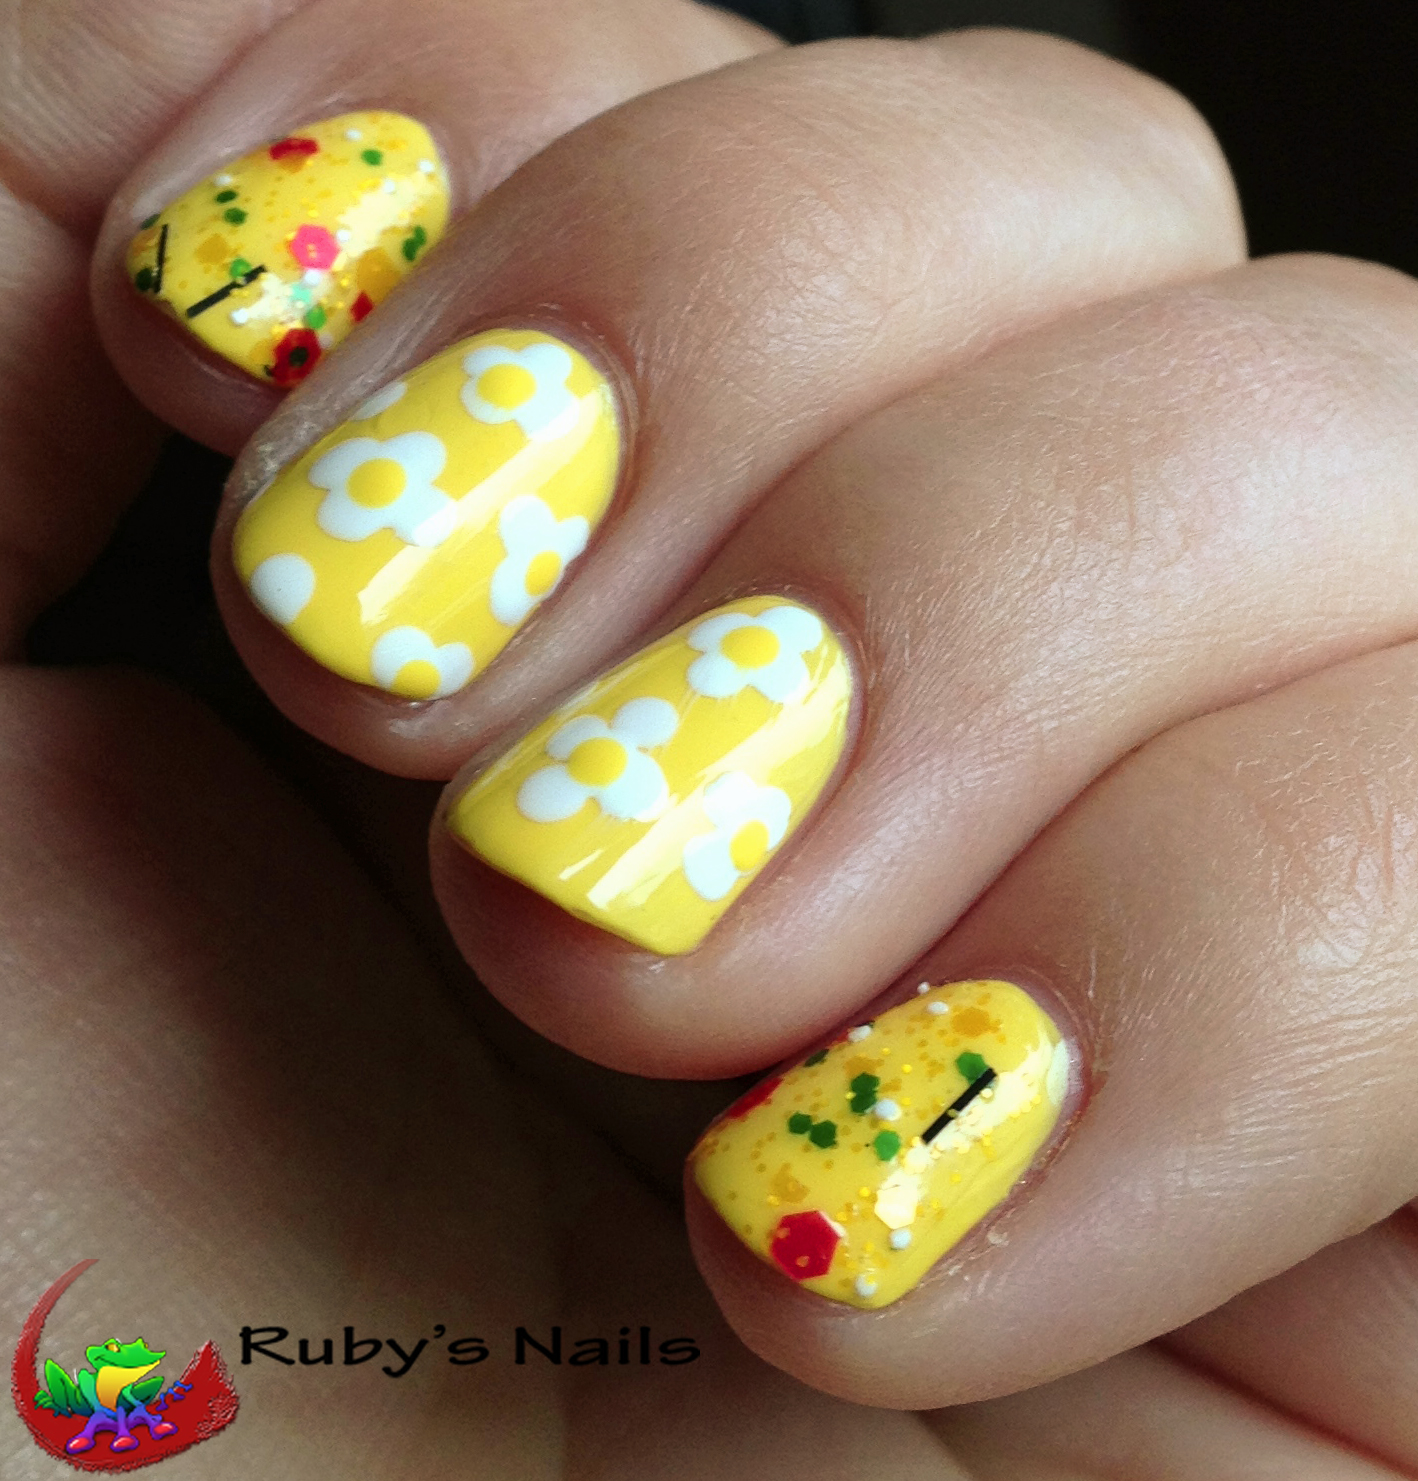 Ruby's Nails: Spring Daisies